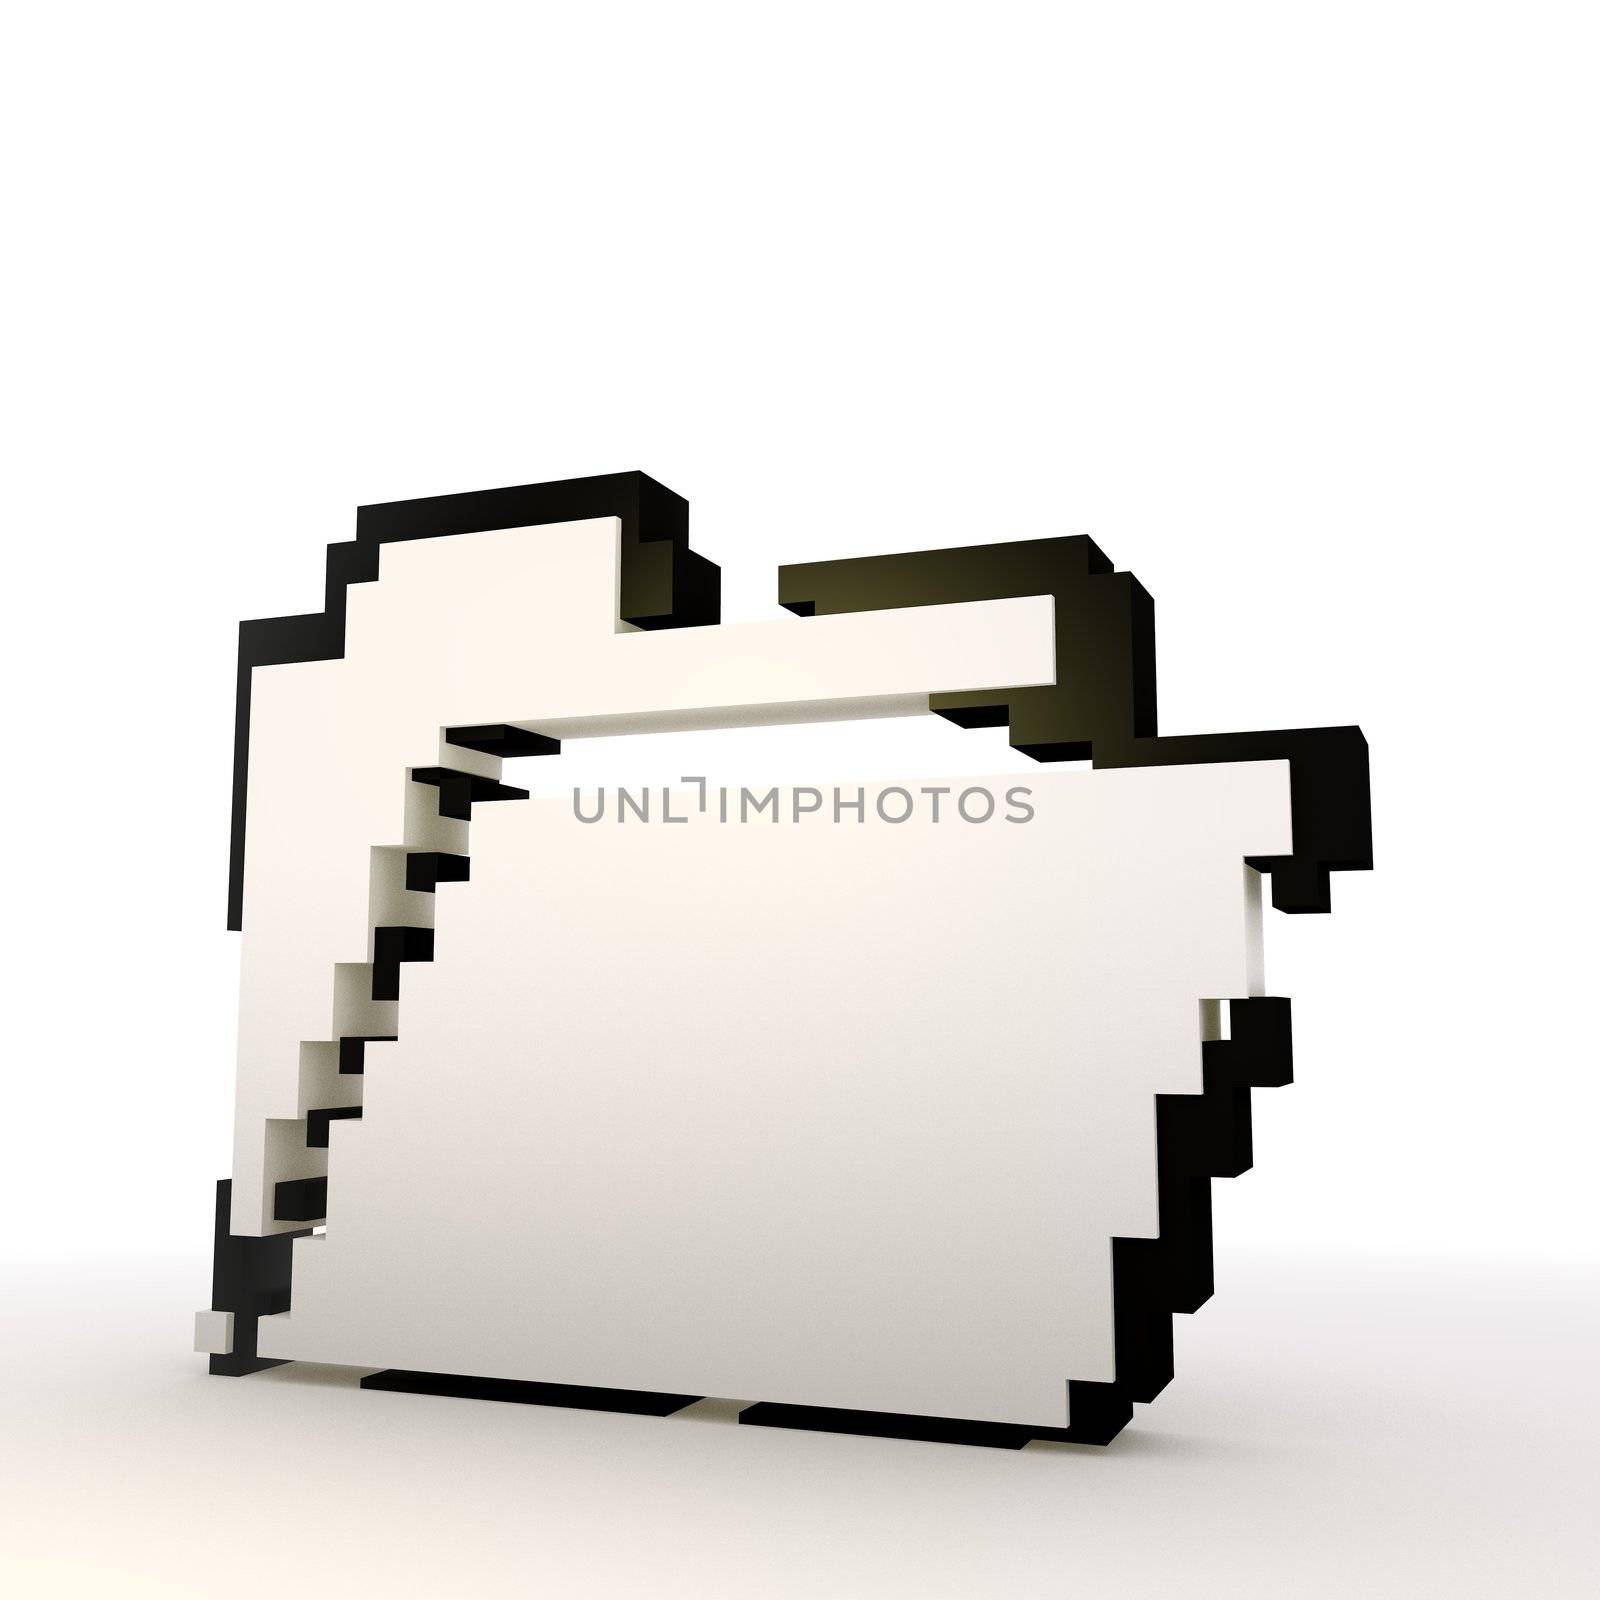 Elegant Folder icon in a stylish white background by onirb